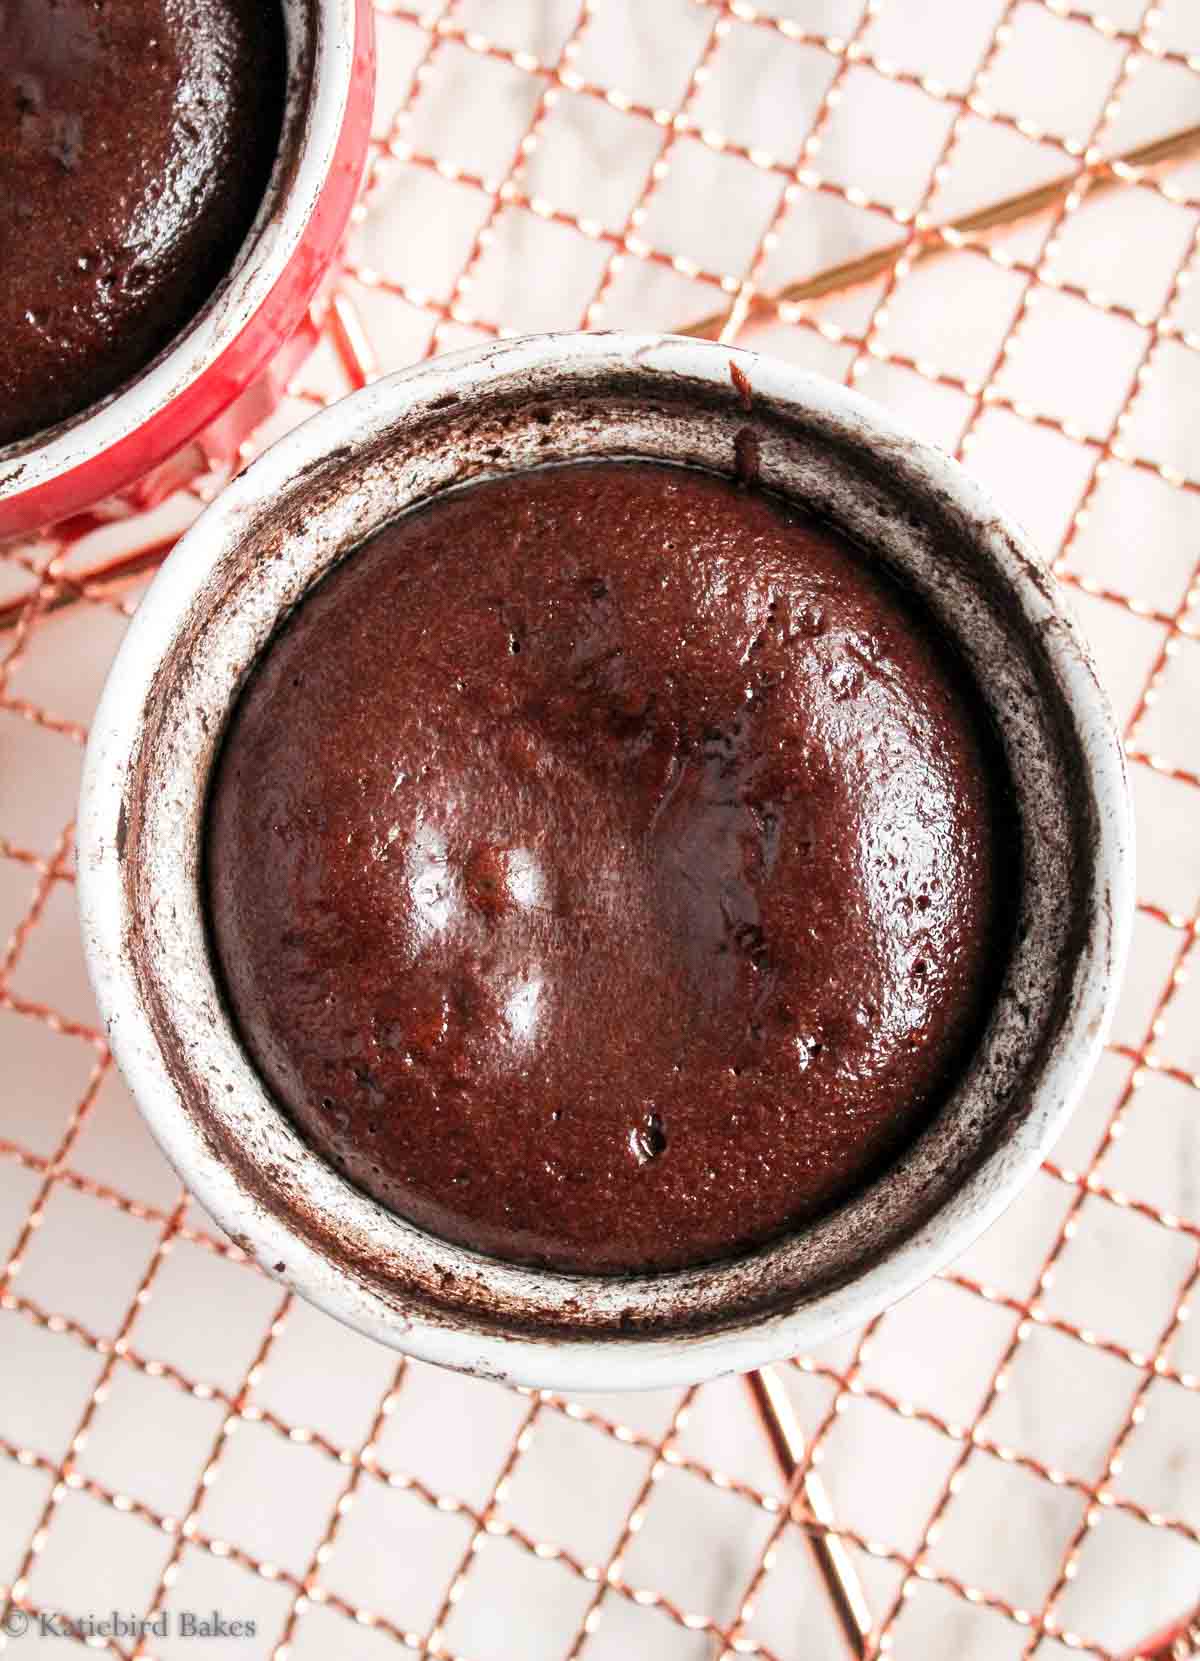 Molten Chocolate Cakes for Two - katiebirdbakes.com